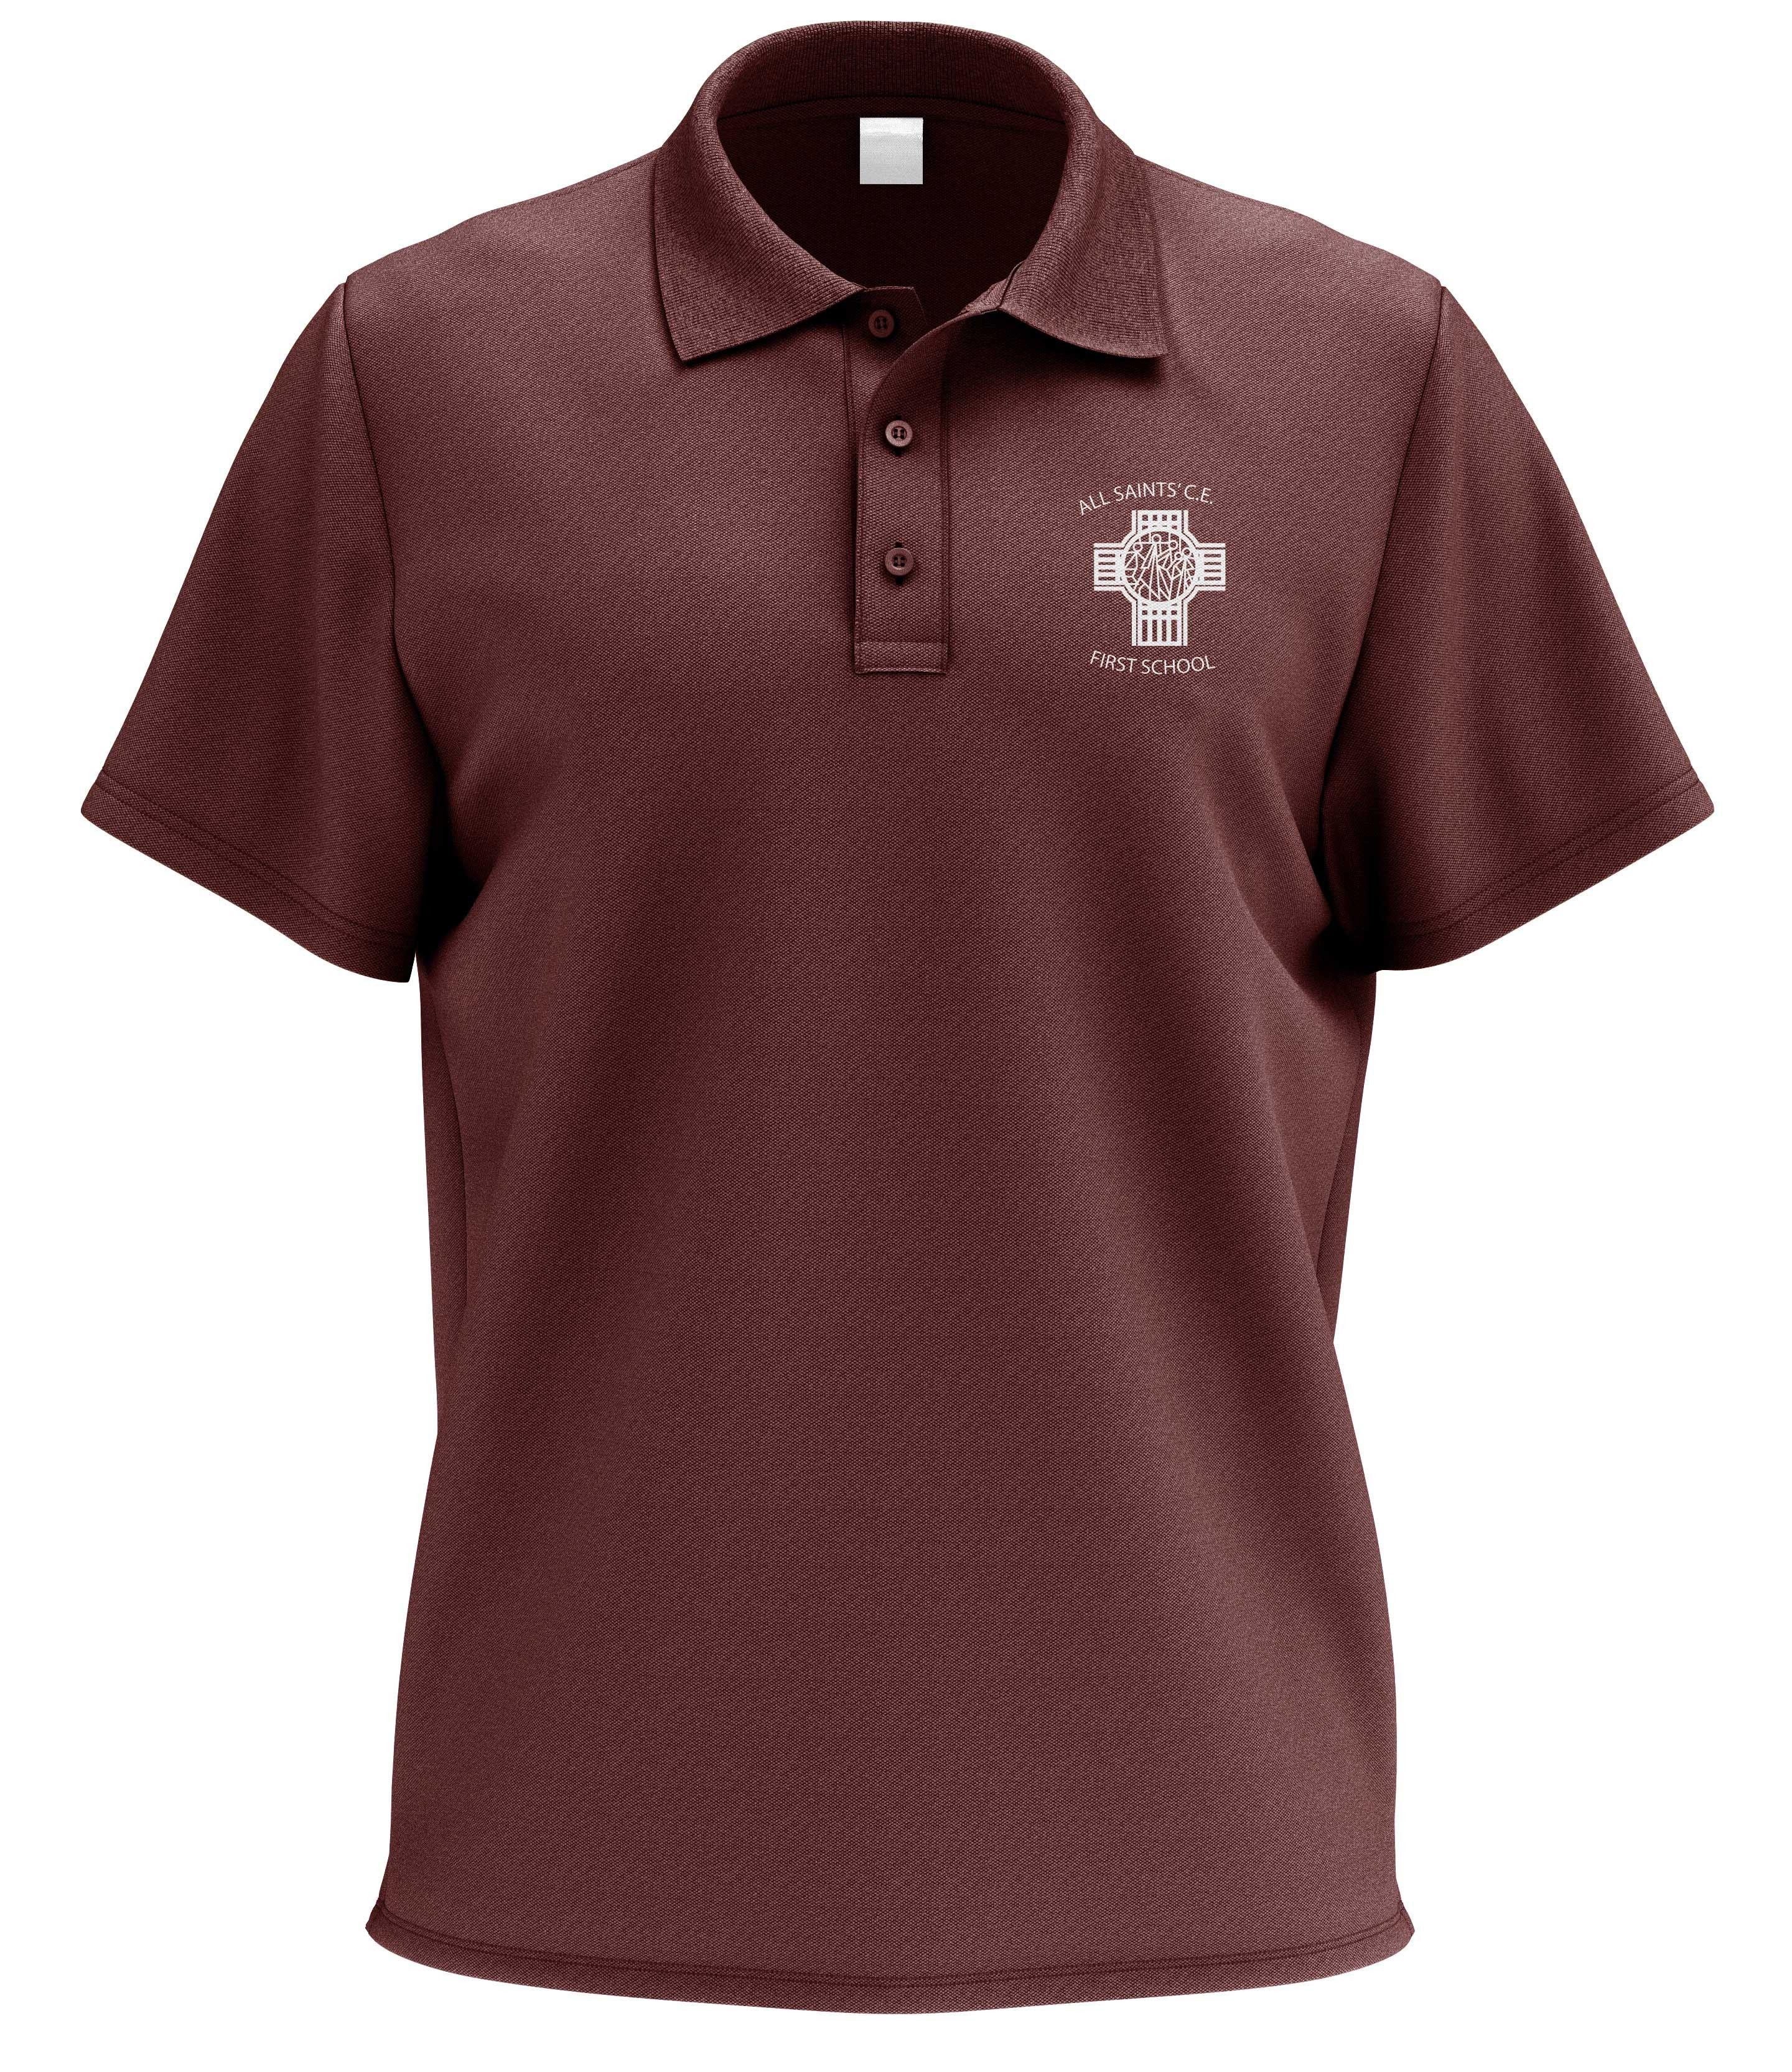 Maroon Polo Logo - School Uniform | All Saints C.E First School Polo by Supersport